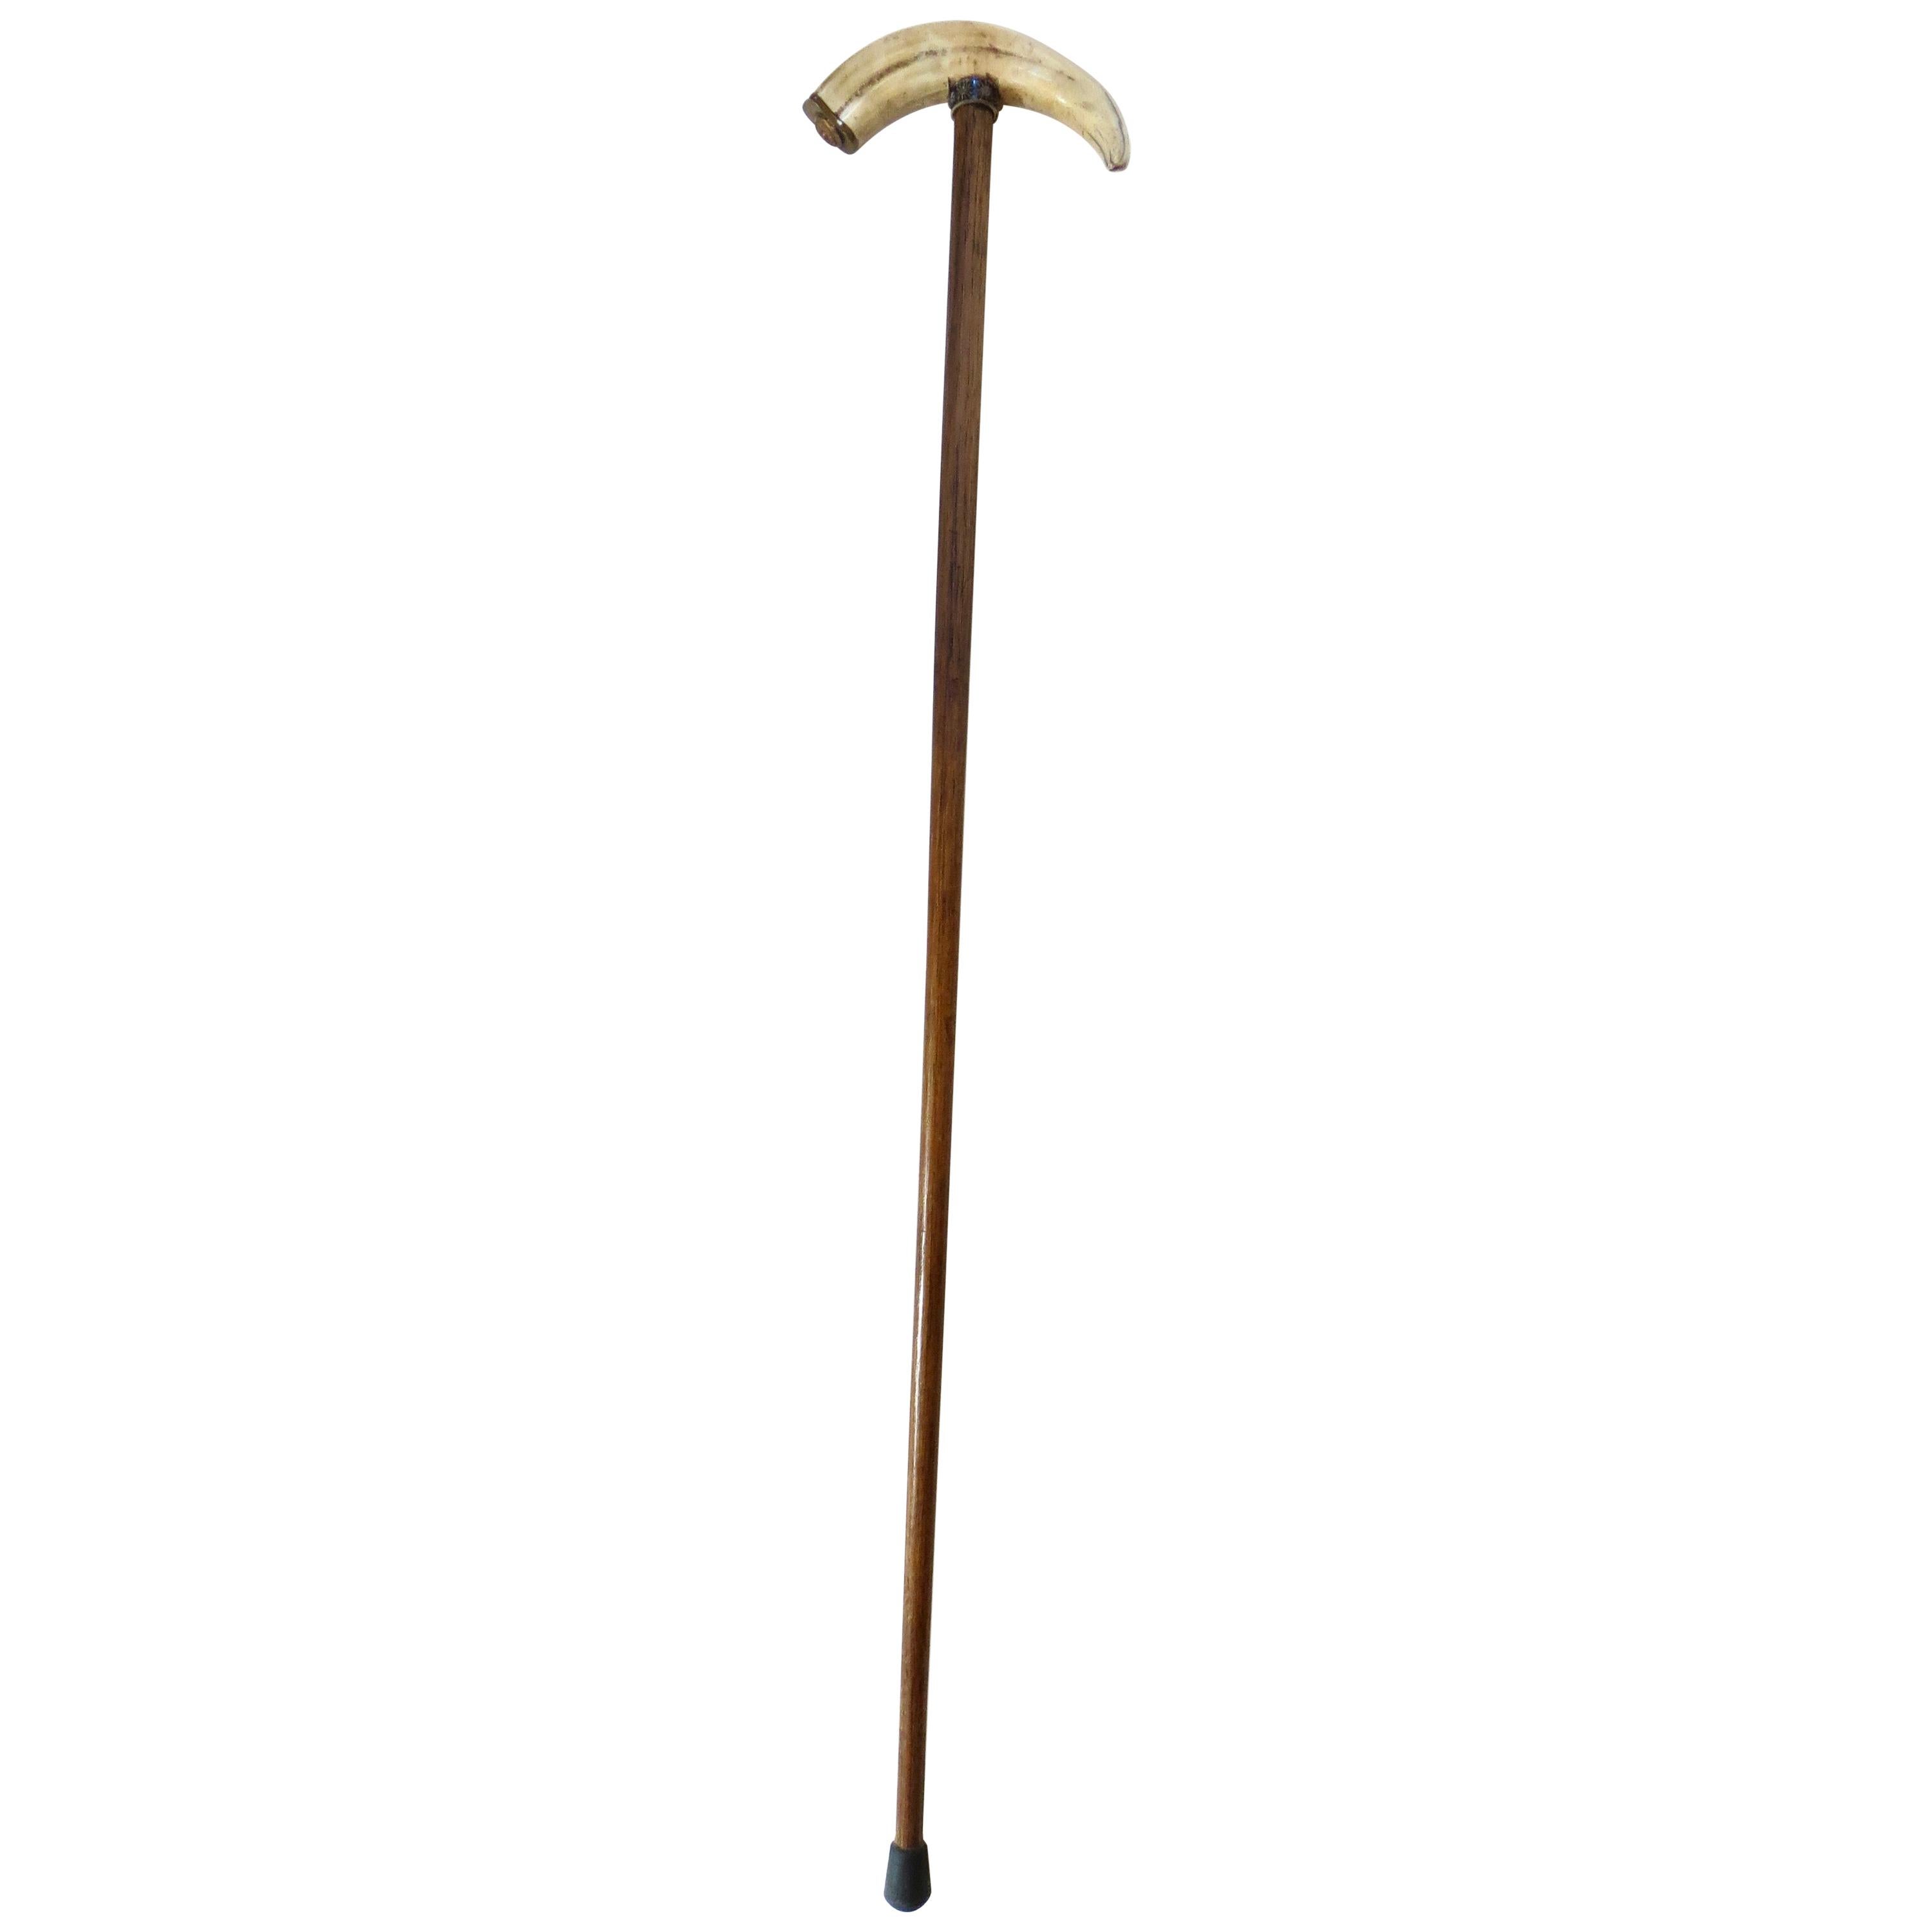 19th Century Boar's Tusk Handle Walking Stick, American